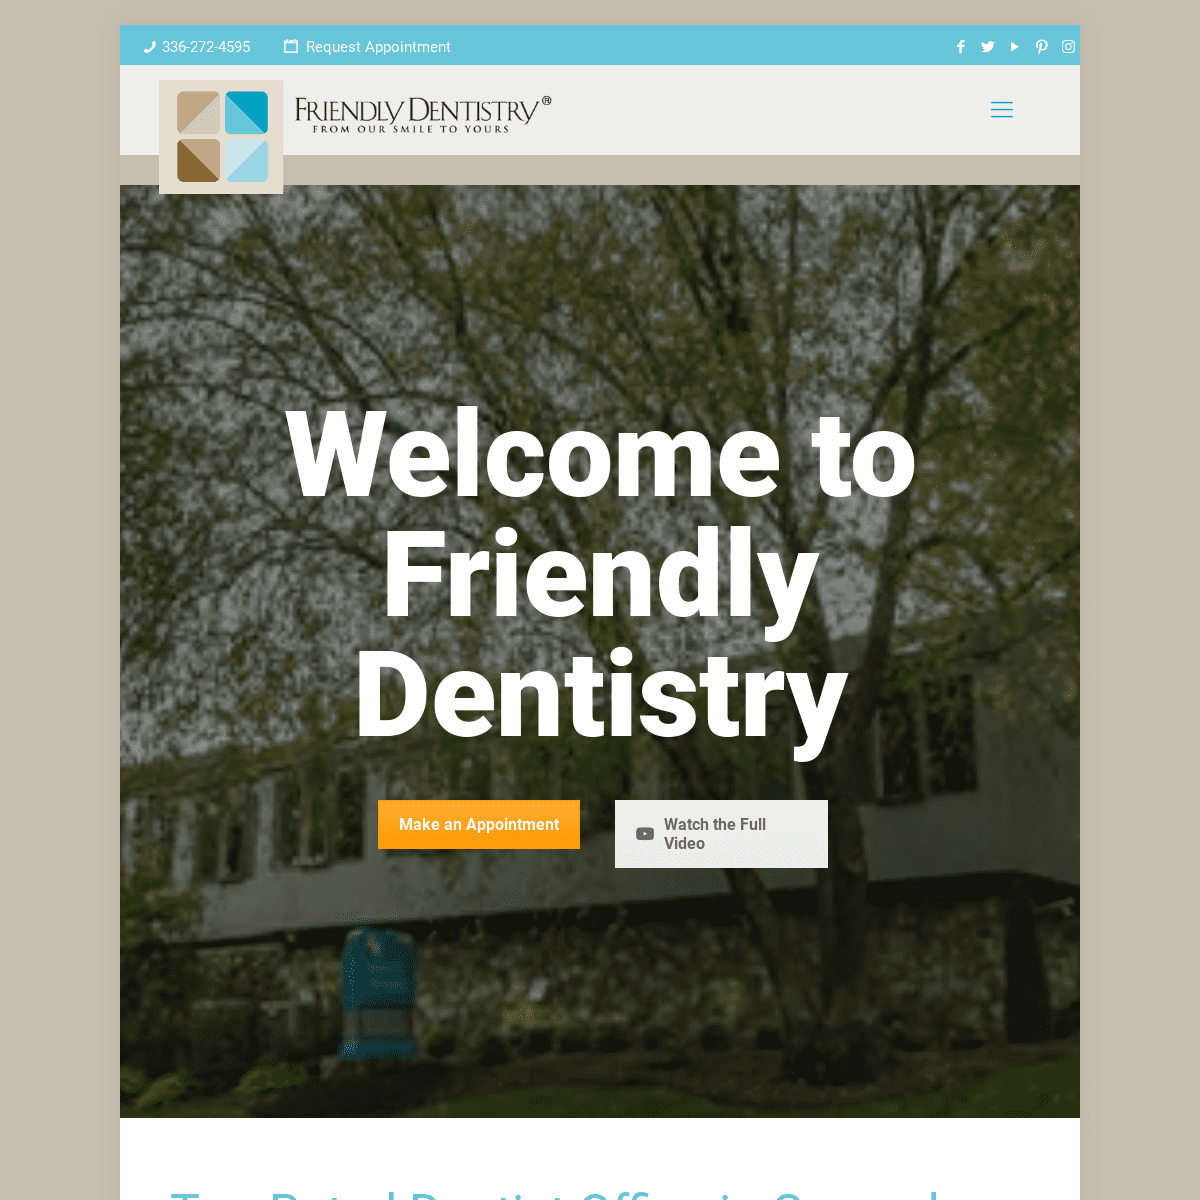 A complete backup of greensboro-dentist.com